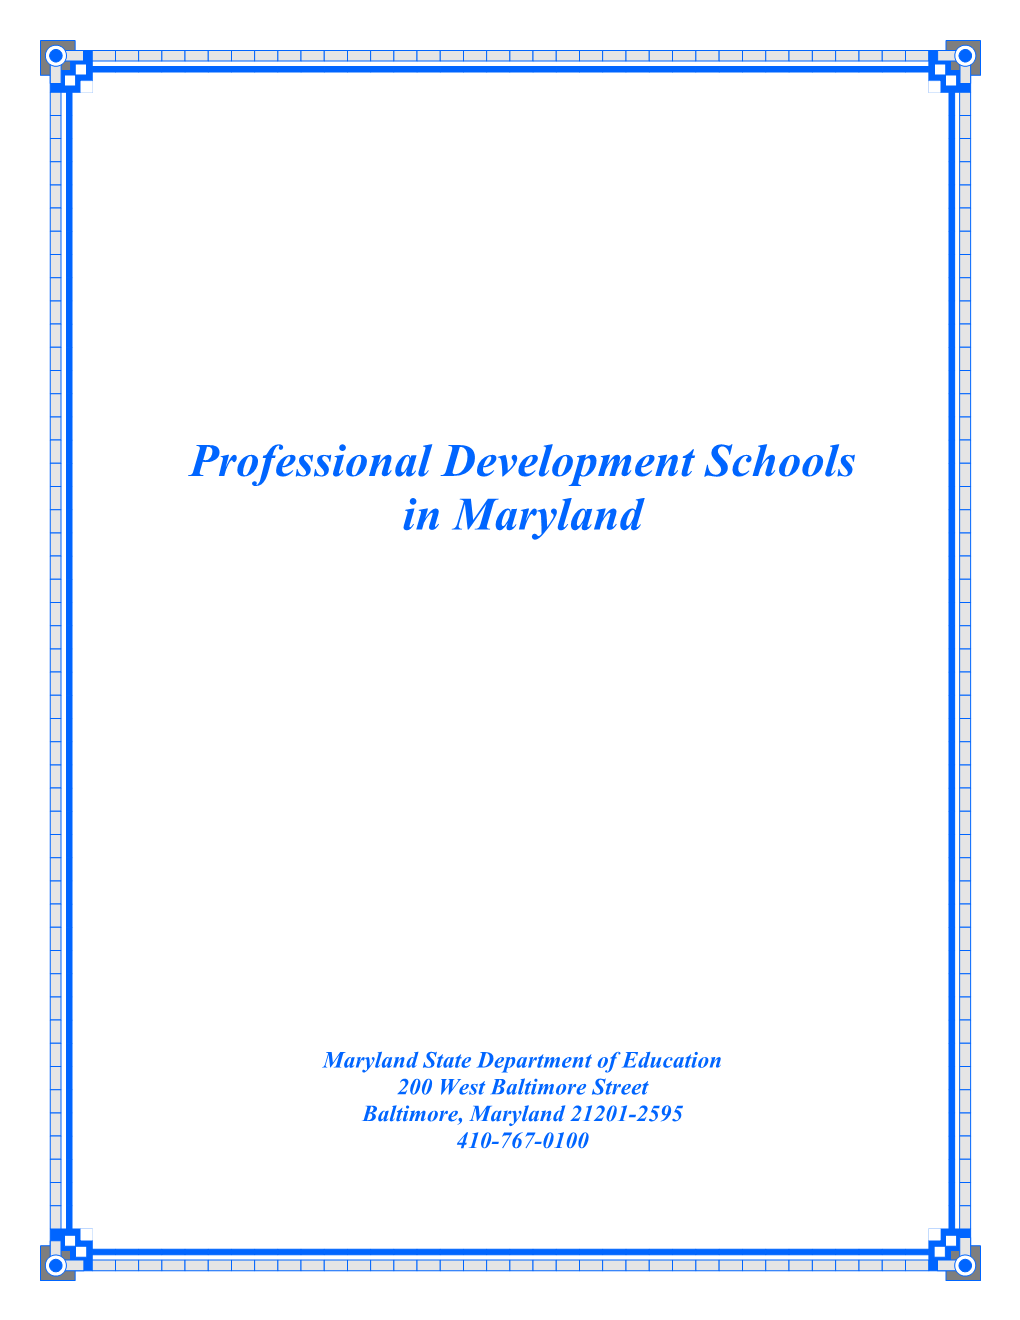 Professional Development Schools in Maryland